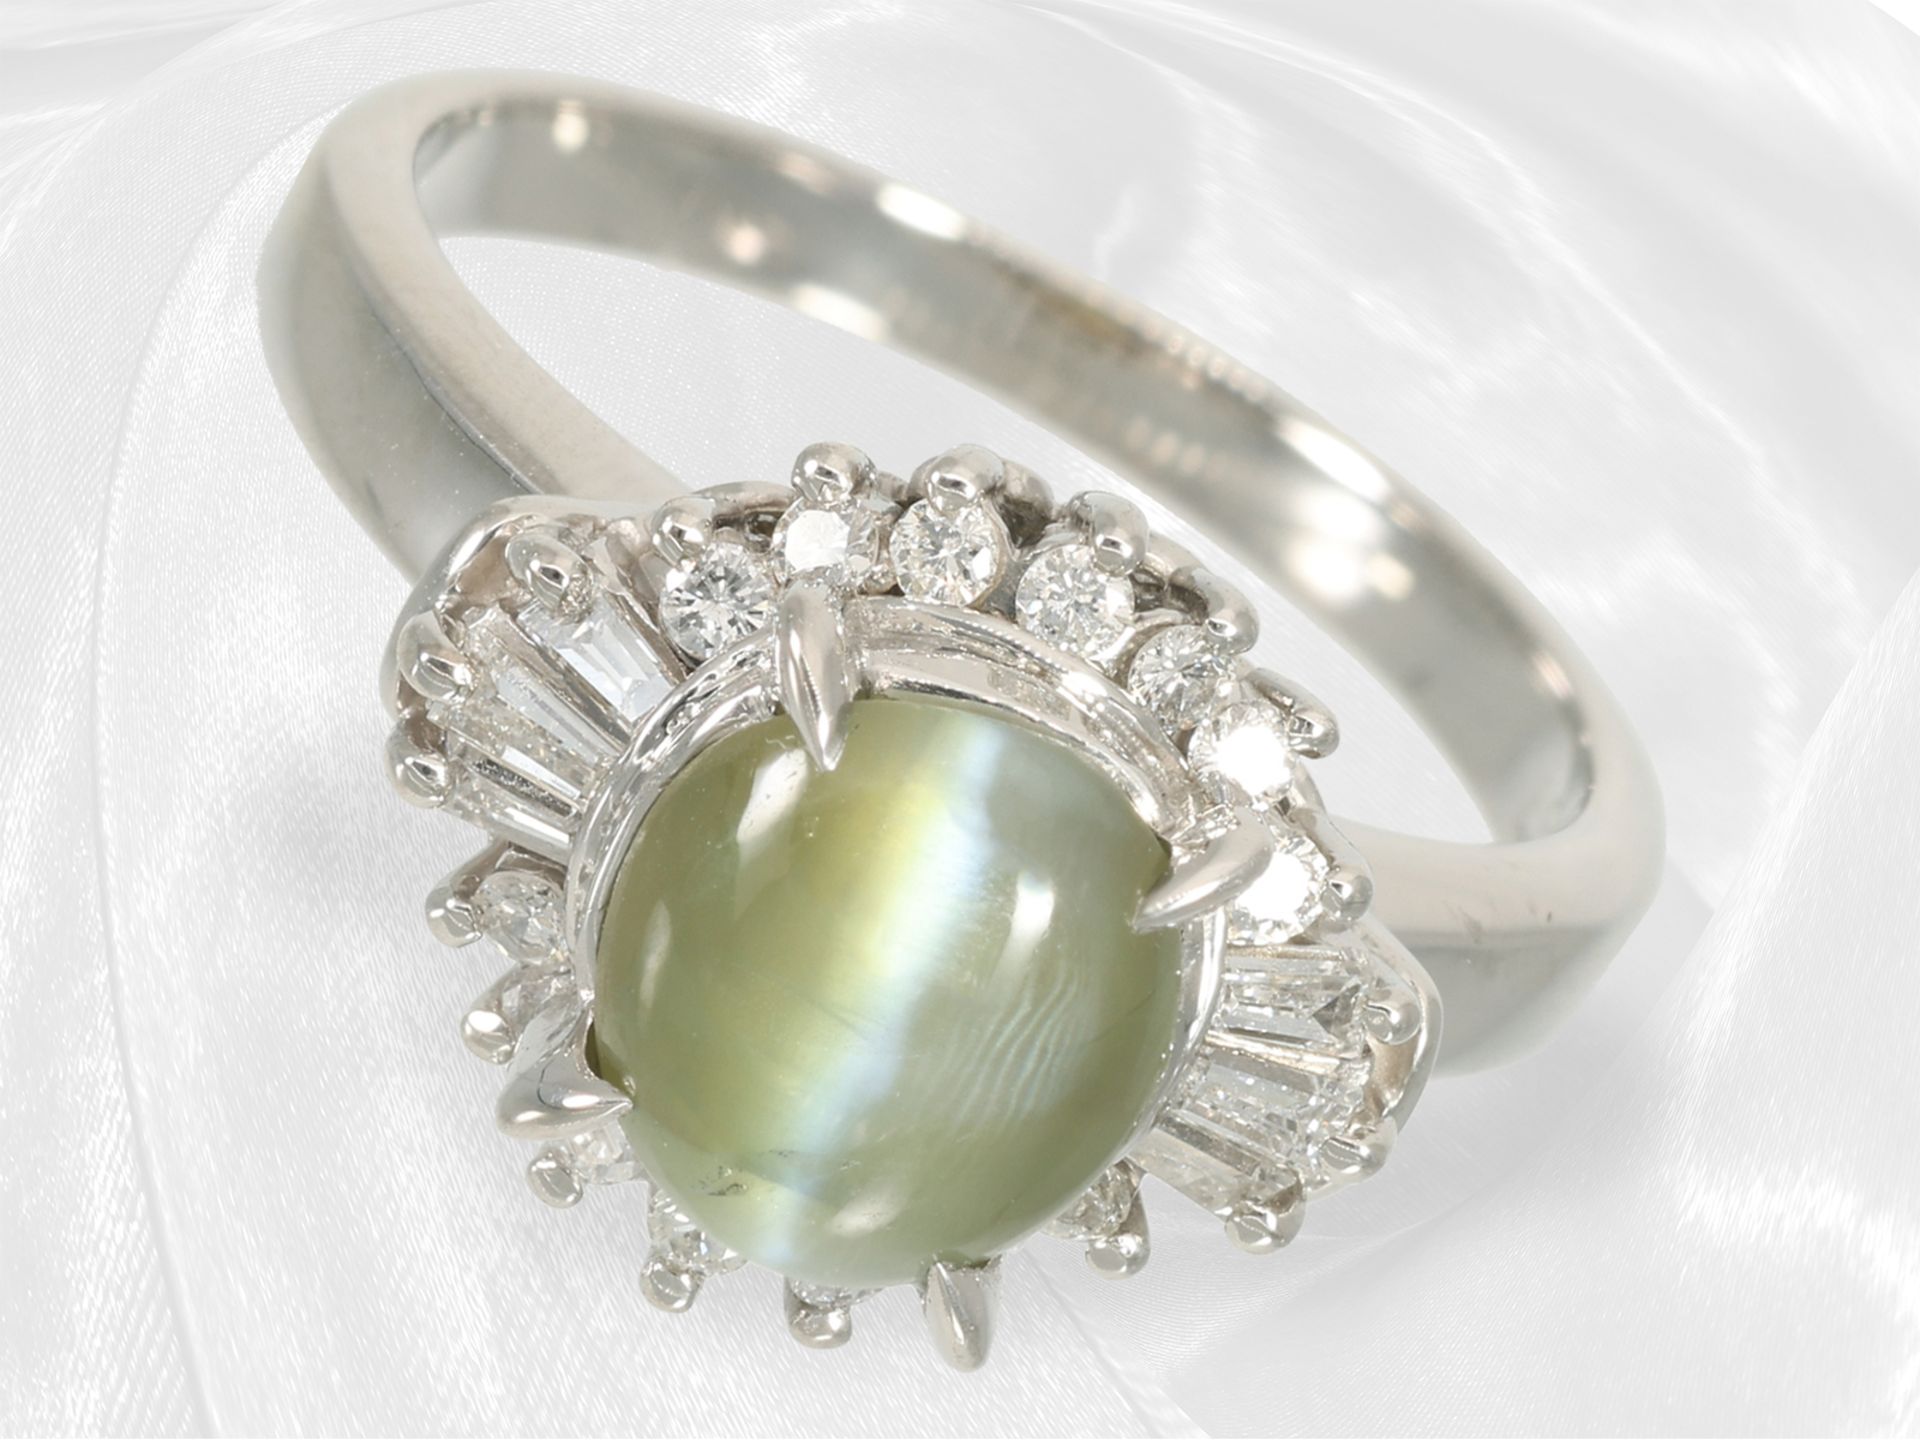 Like new platinum goldsmith ring with diamonds and rare cat's eye chrysoberyll - Image 5 of 8